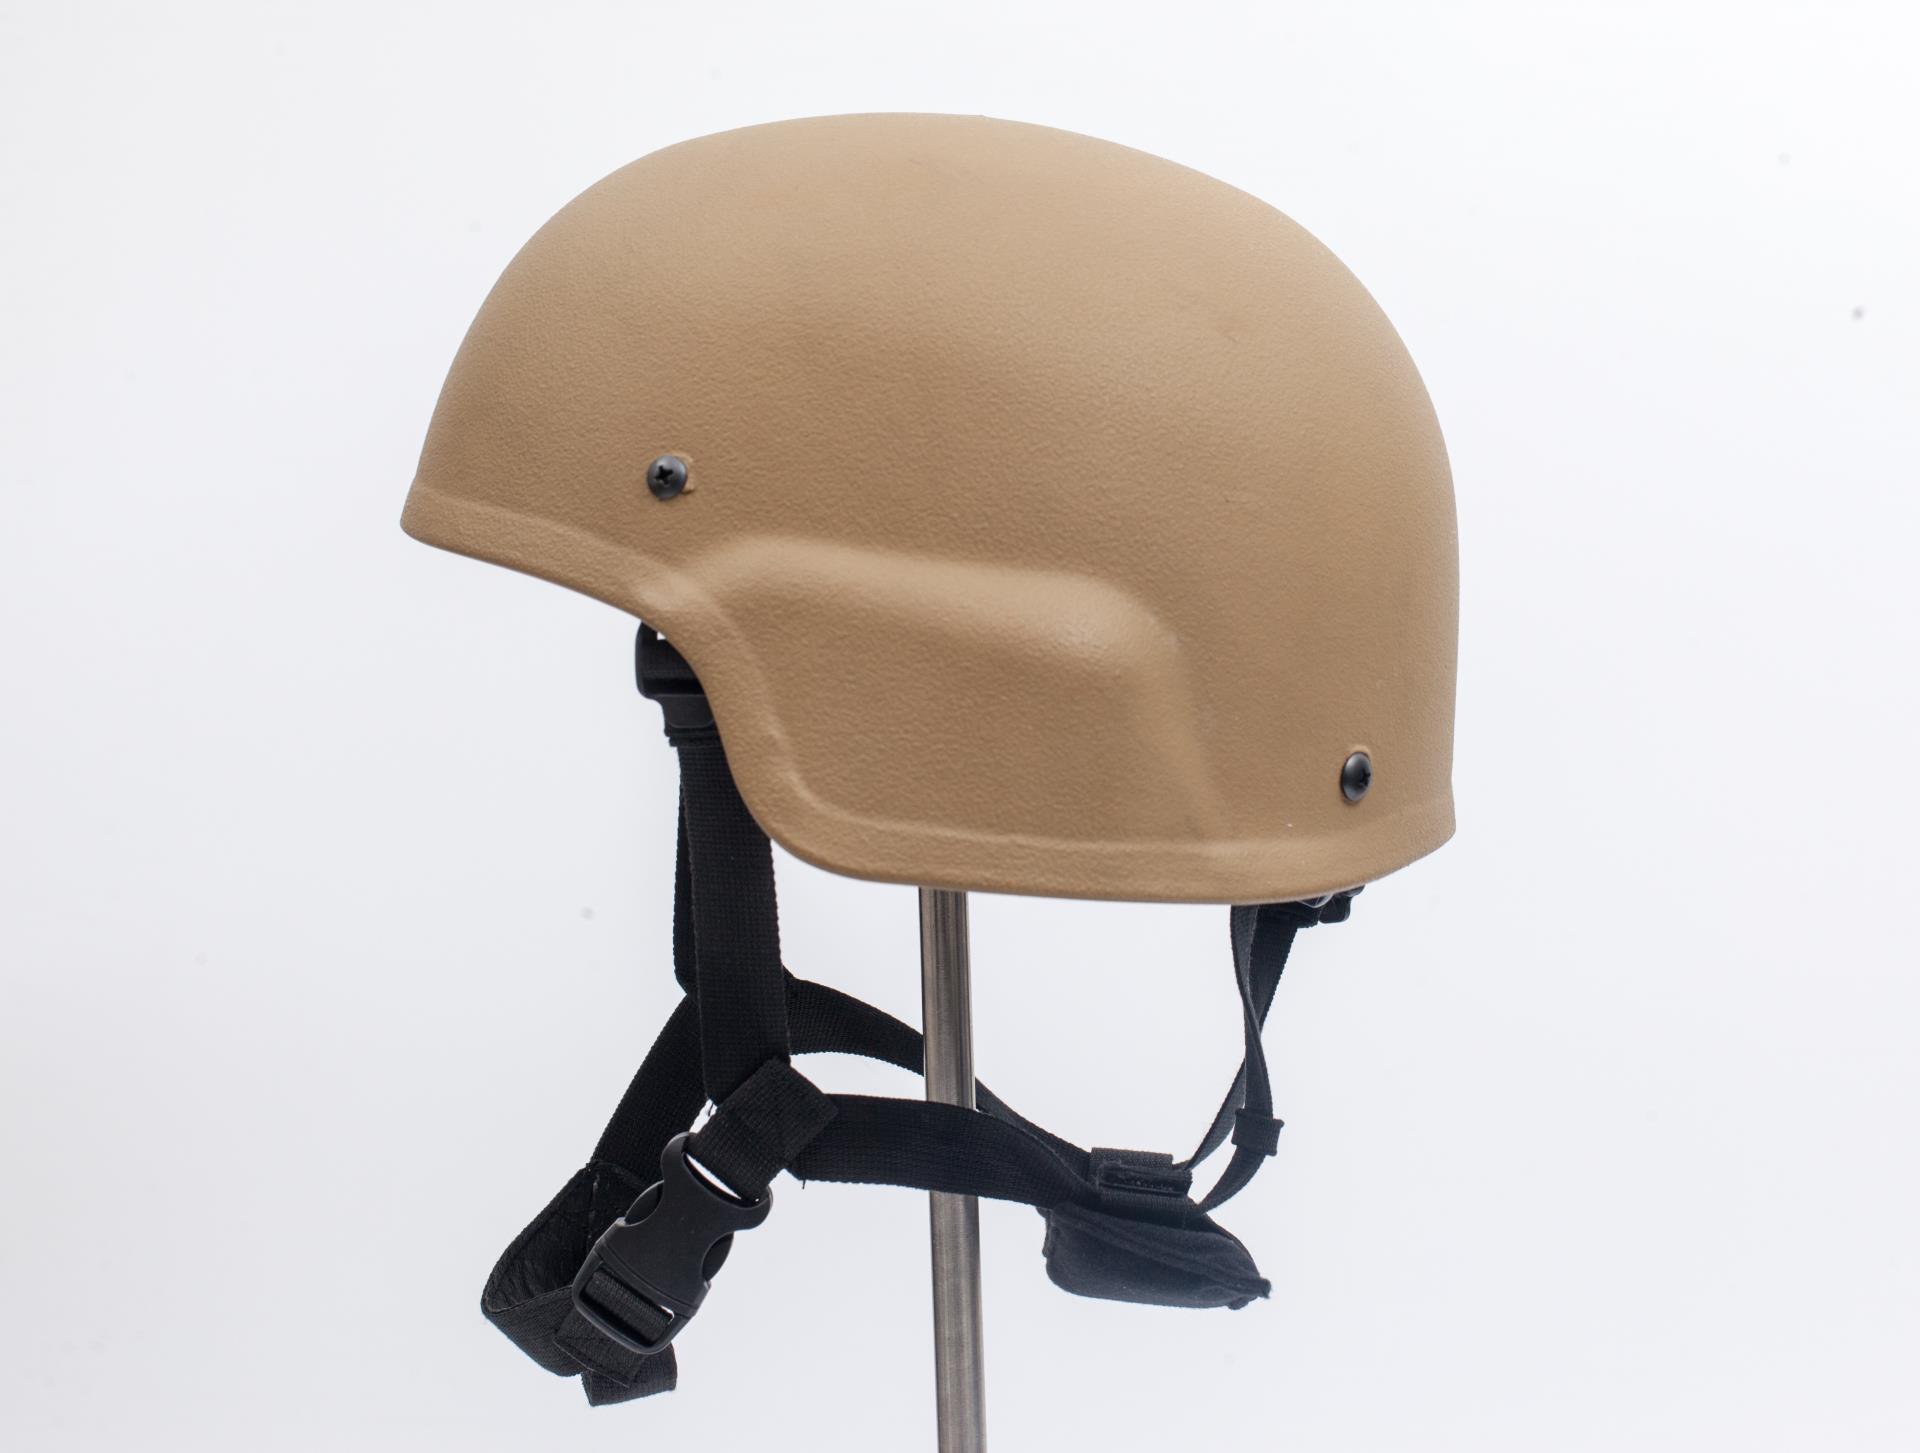 Ballistic Helmet_PROTECTION_同益中